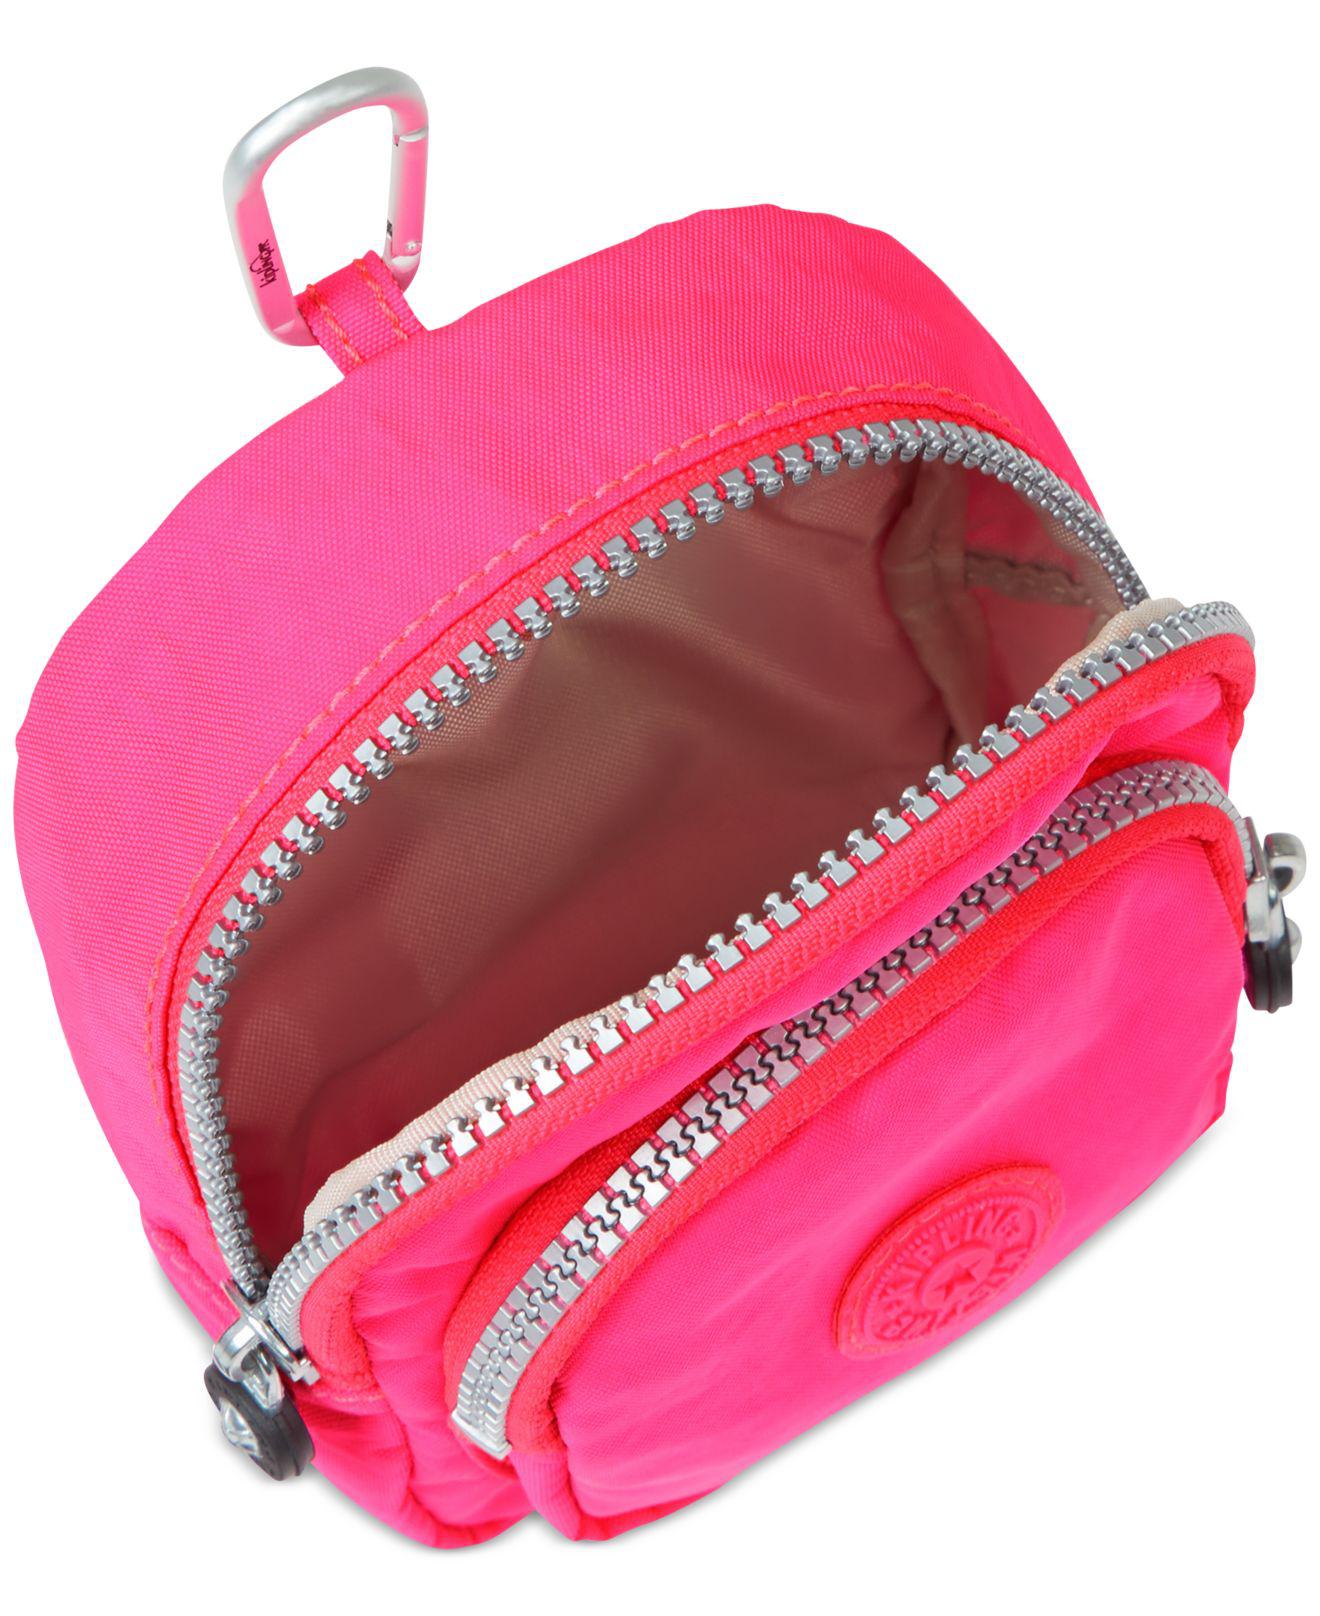 Kipling Synthetic Kami Key Chain Mini Bag in Pink - Lyst